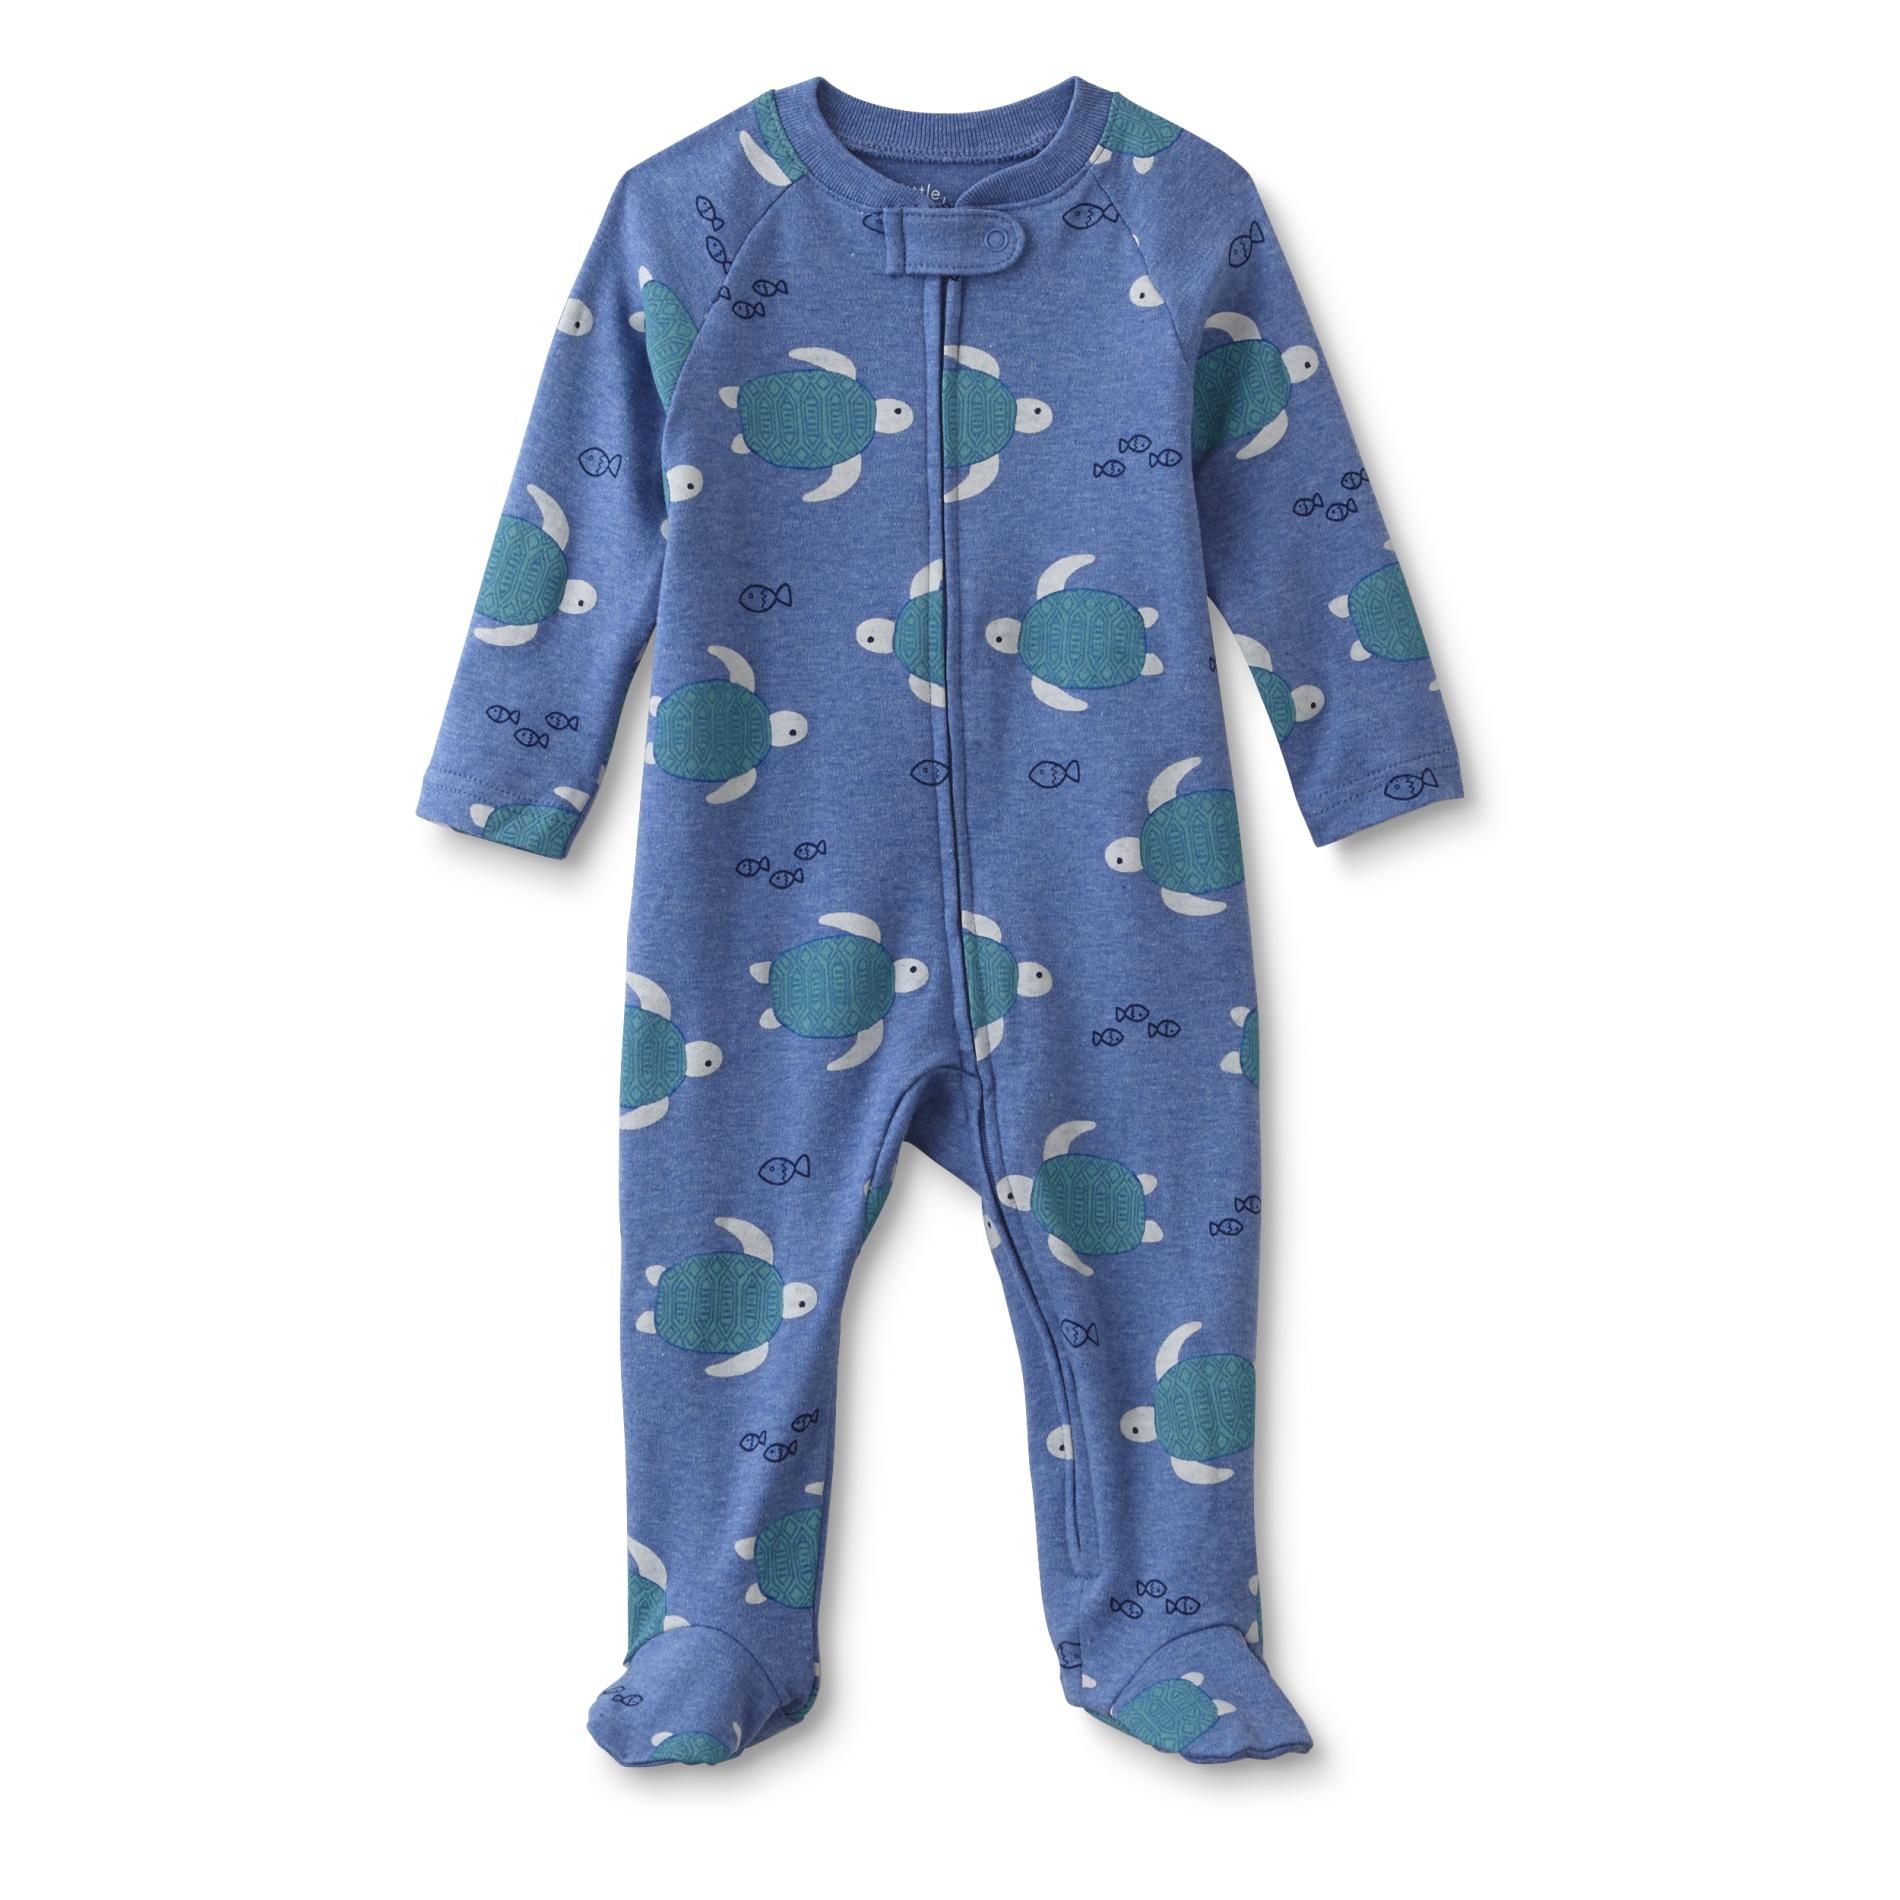 Little Wonders Newborn Boy's Footed Sleeper Pajamas - Turtles & Fish